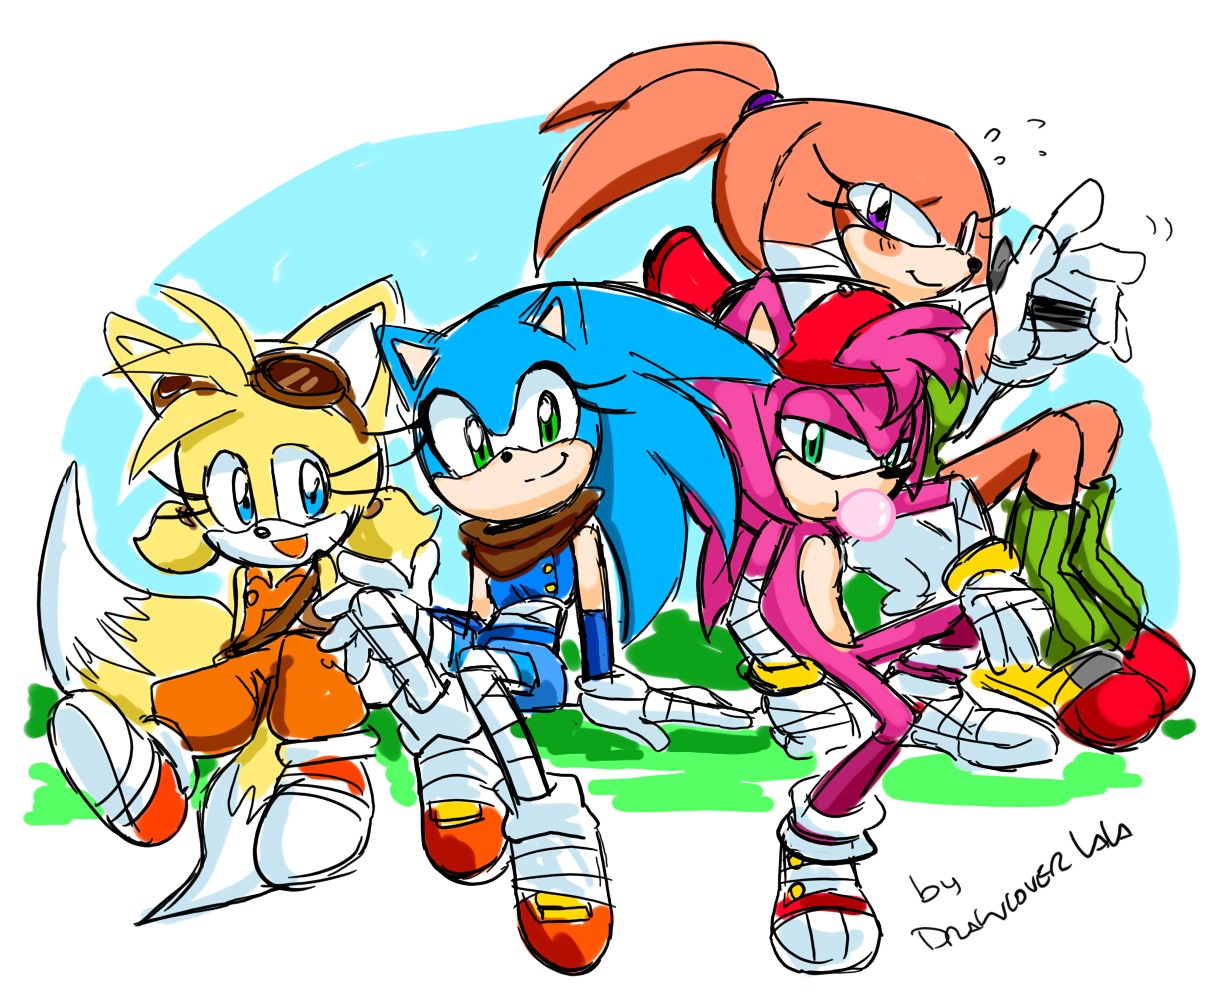 Tails (character), Sonic the Hedgehog, Sonic, Sonic Boom, Genderswap